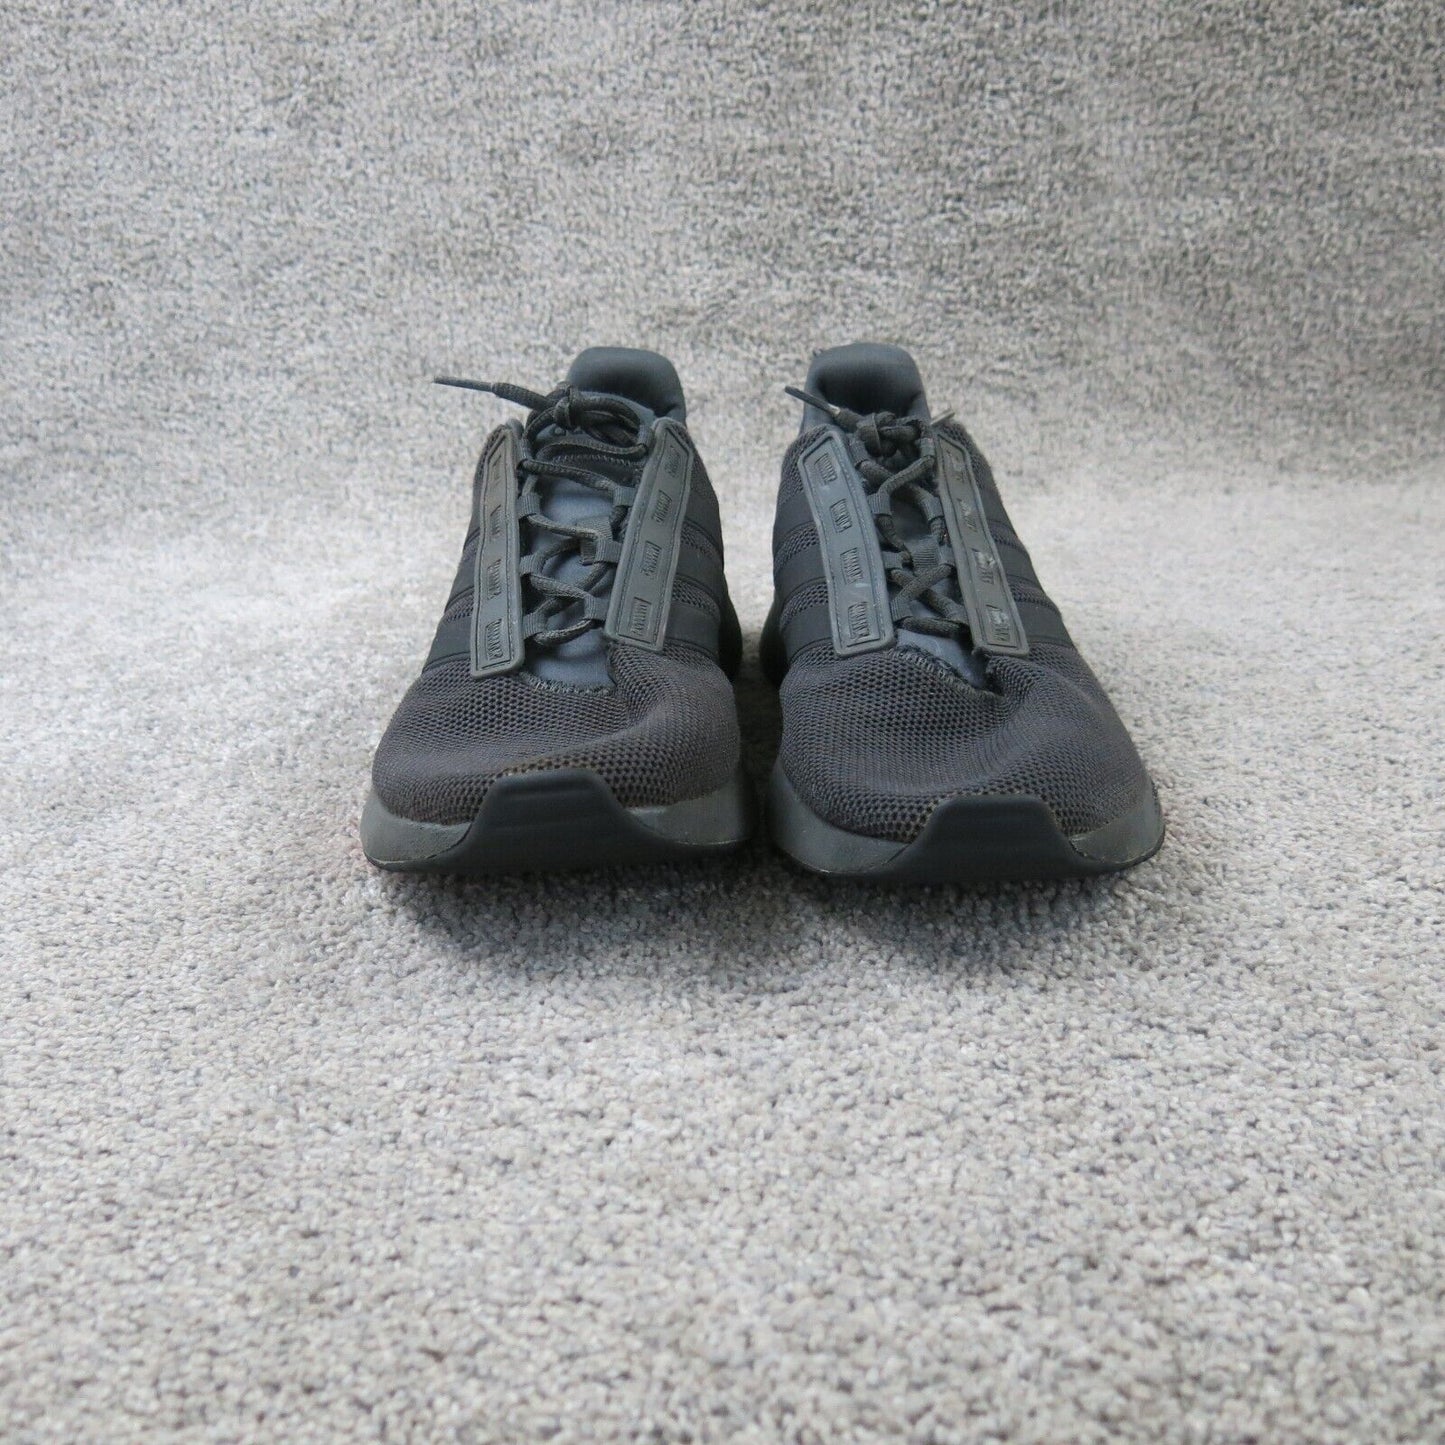 Adidas Men Cosmic 2SL Cloudfoam Shoe PWI 001001 Sneaker Low Top Black Size US 10